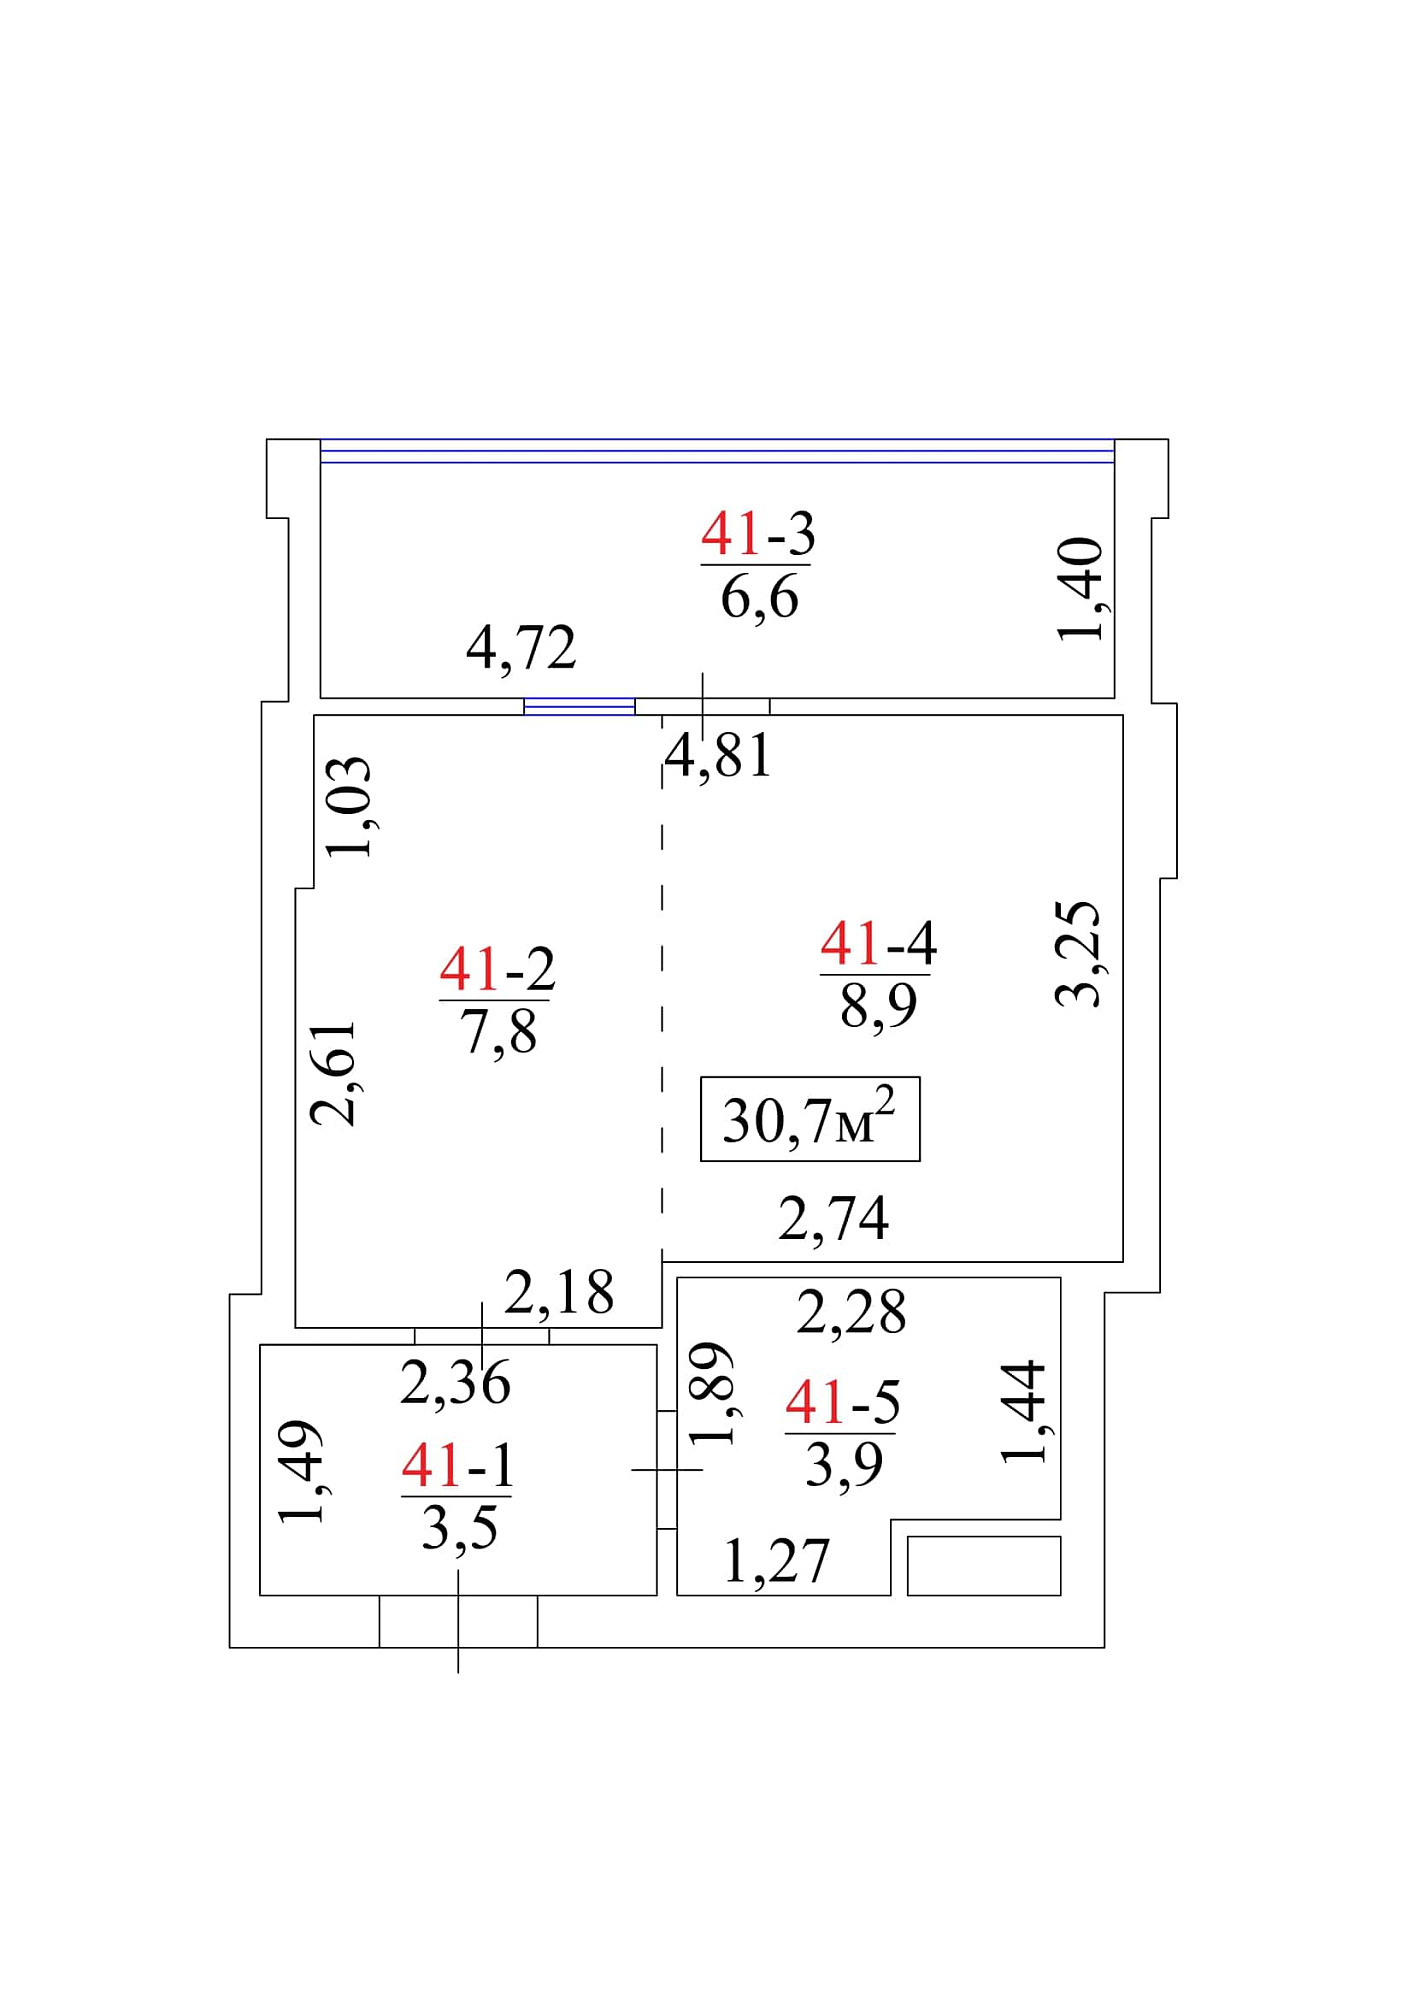 Planning Smart flats area 30.7m2, AB-01-05/00040.